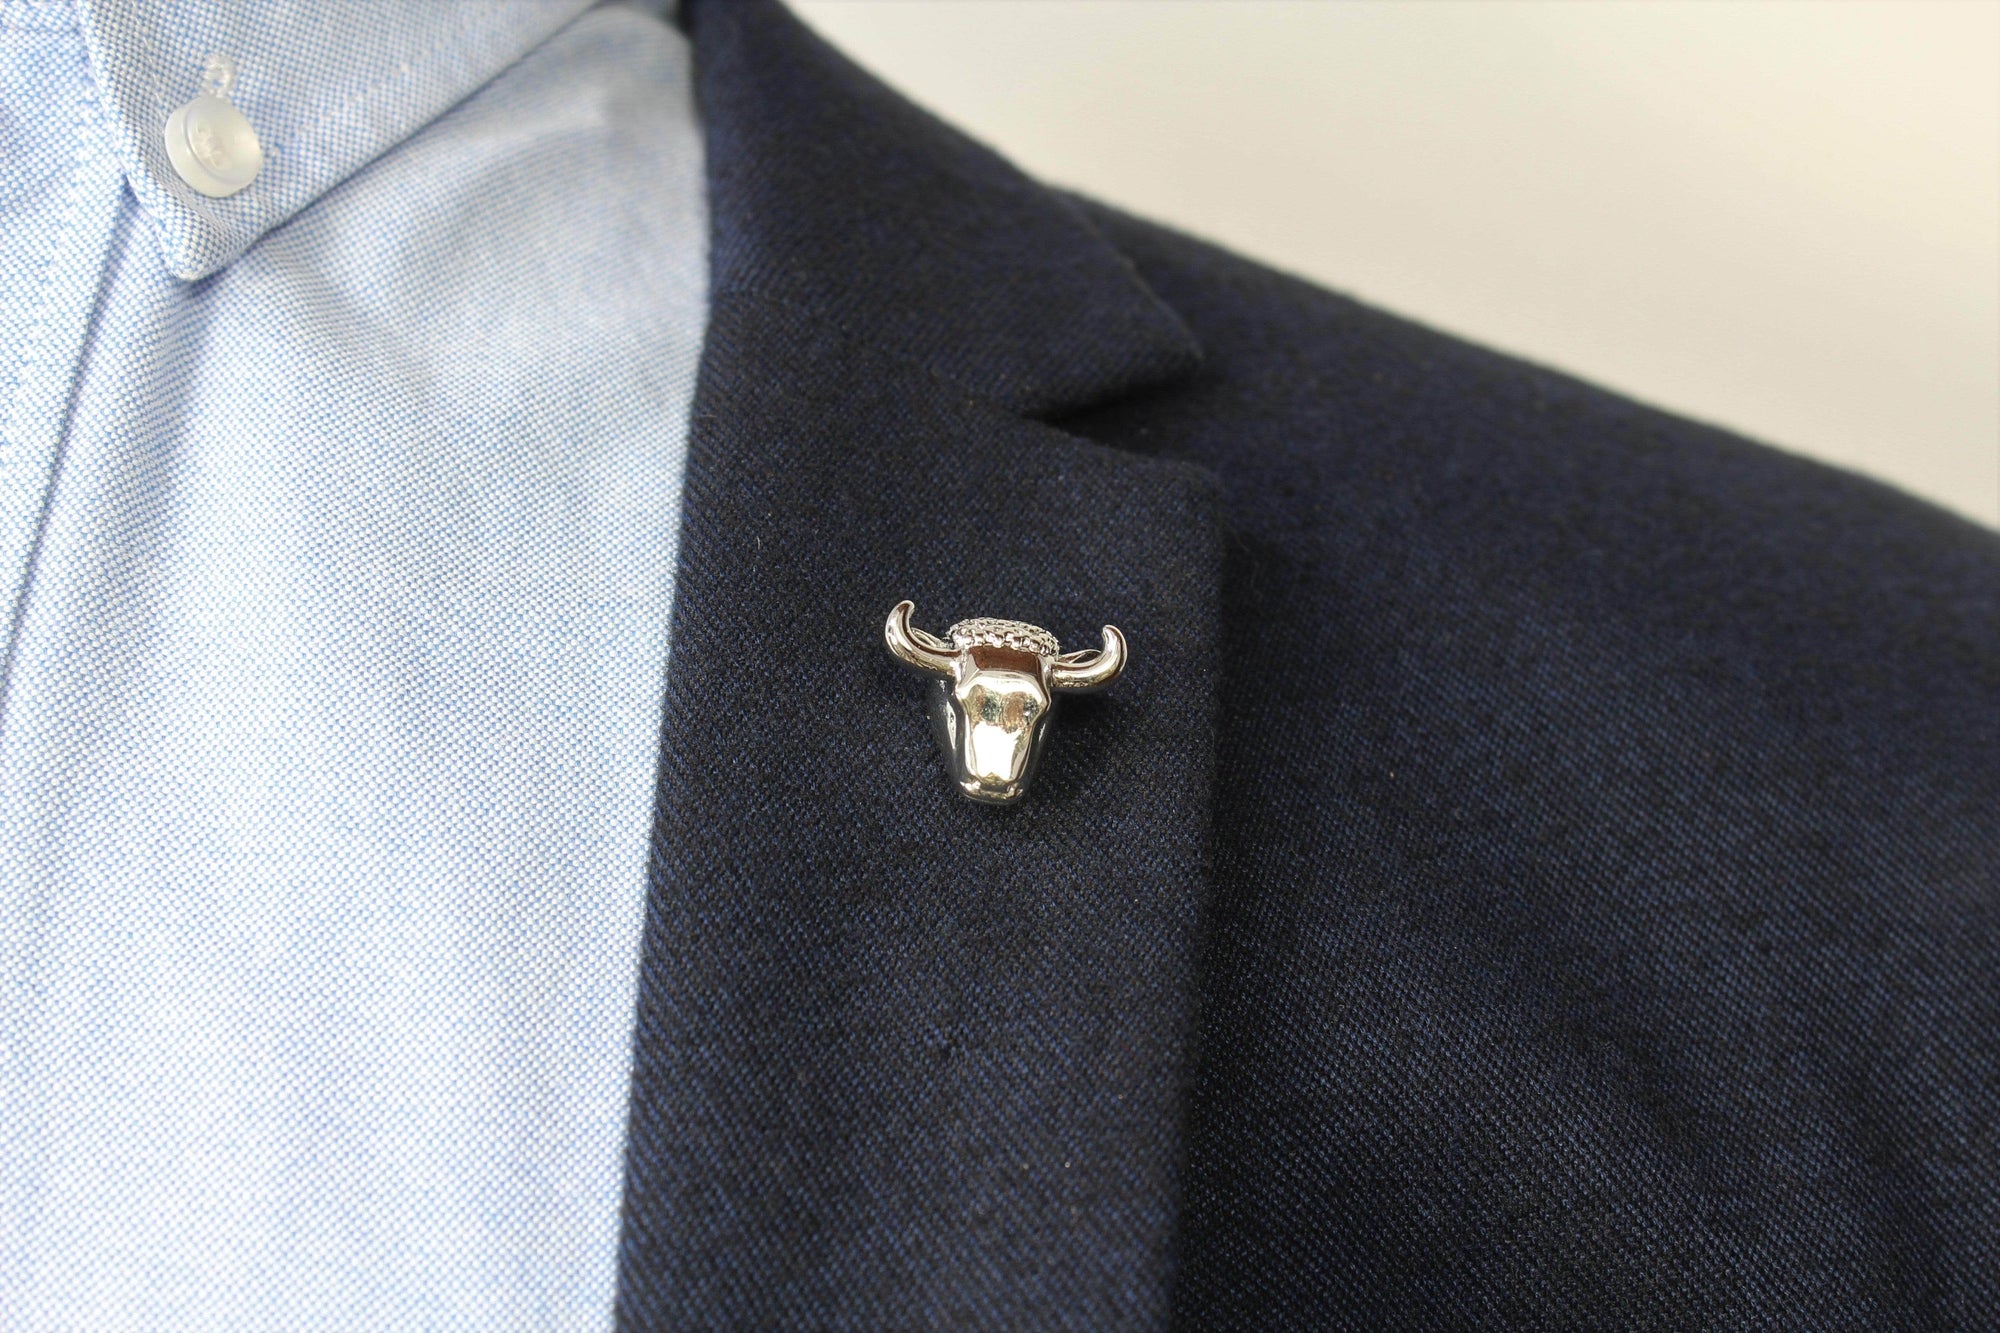 Bull Head Lapel Pin on blazer - Stolen Riches